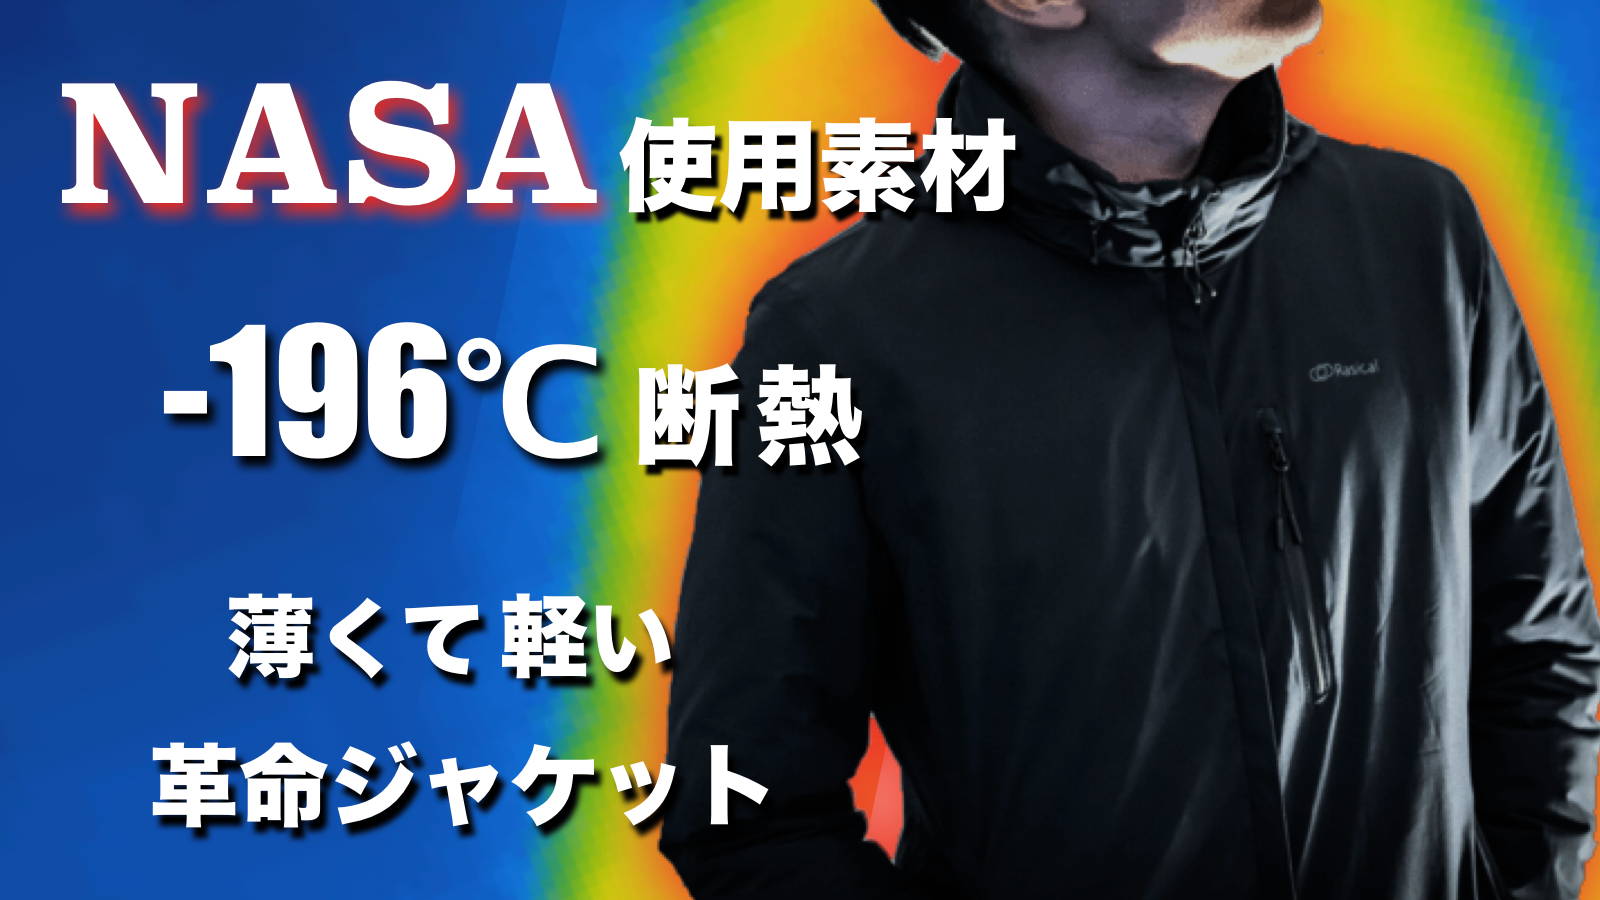 NASA宇宙服にも使われる、-196度を断熱するハイテク素材ジャケット「フェアリーノヴァ」【即納】